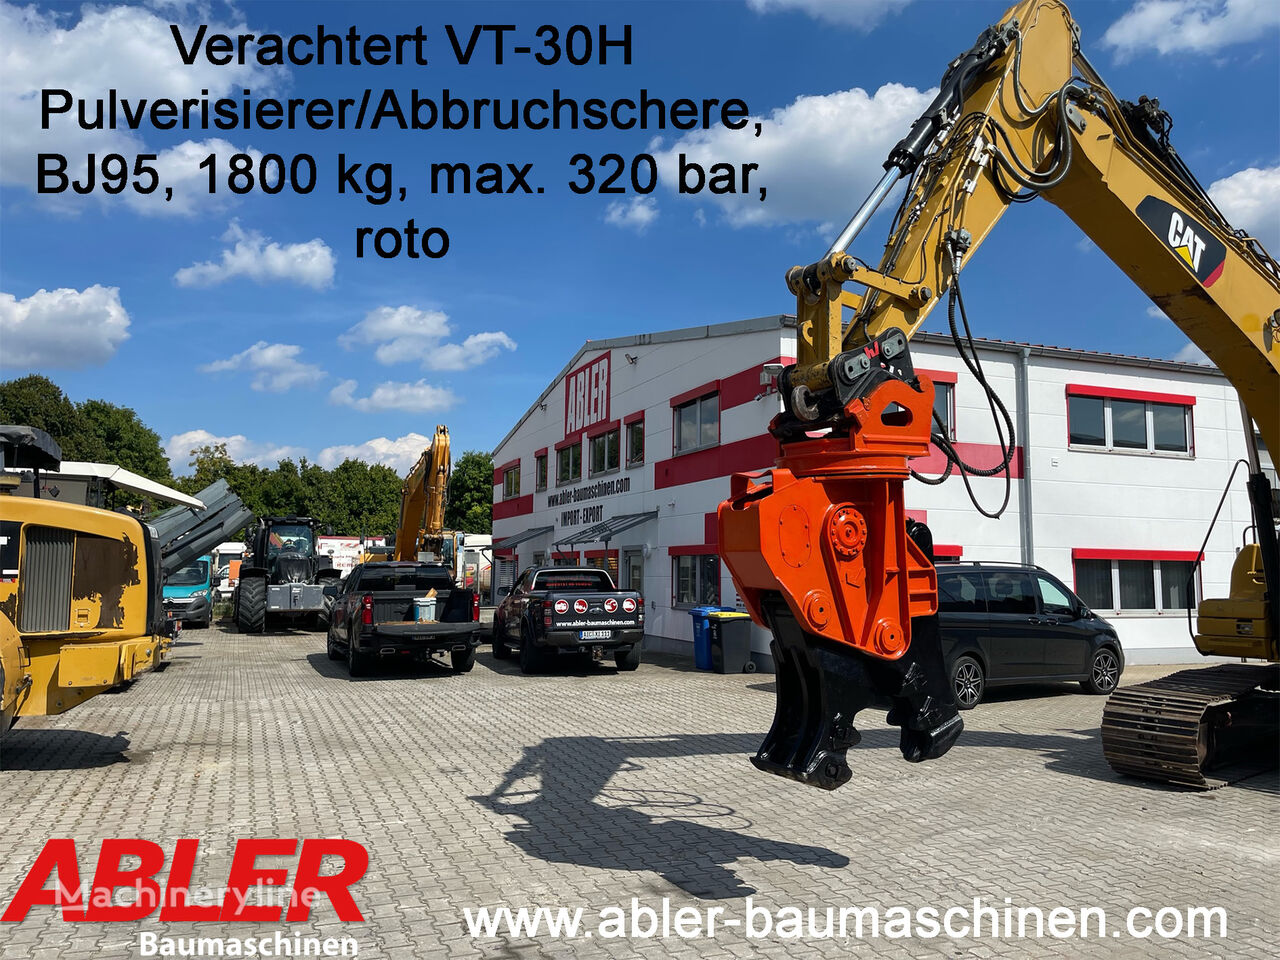 гидроножницы Verachtert VT30H Abbruchschere/Pulverisierer 15-25t Bagger